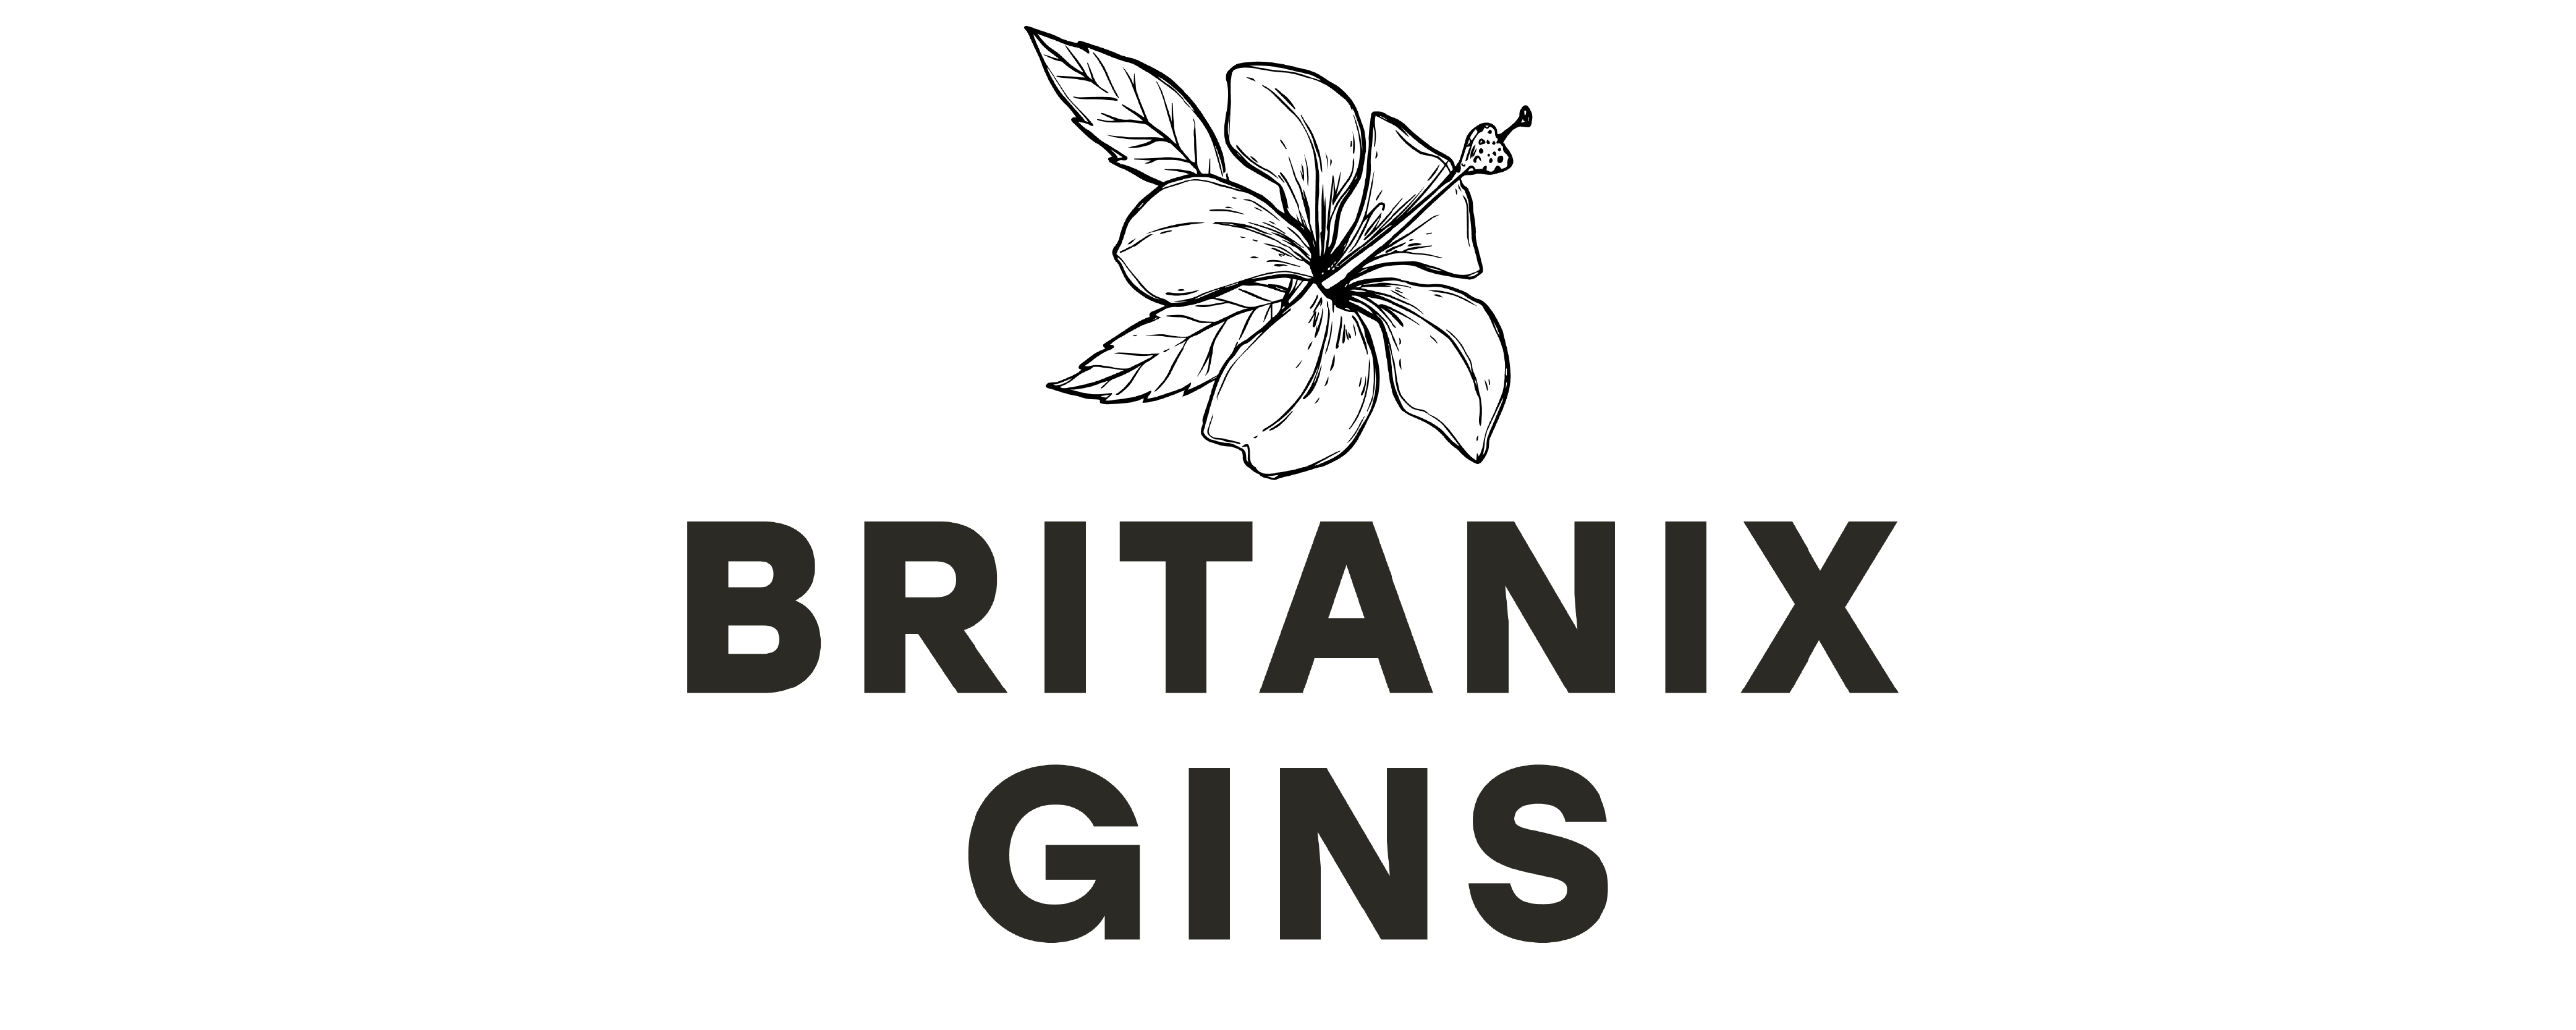 Britanix Gins